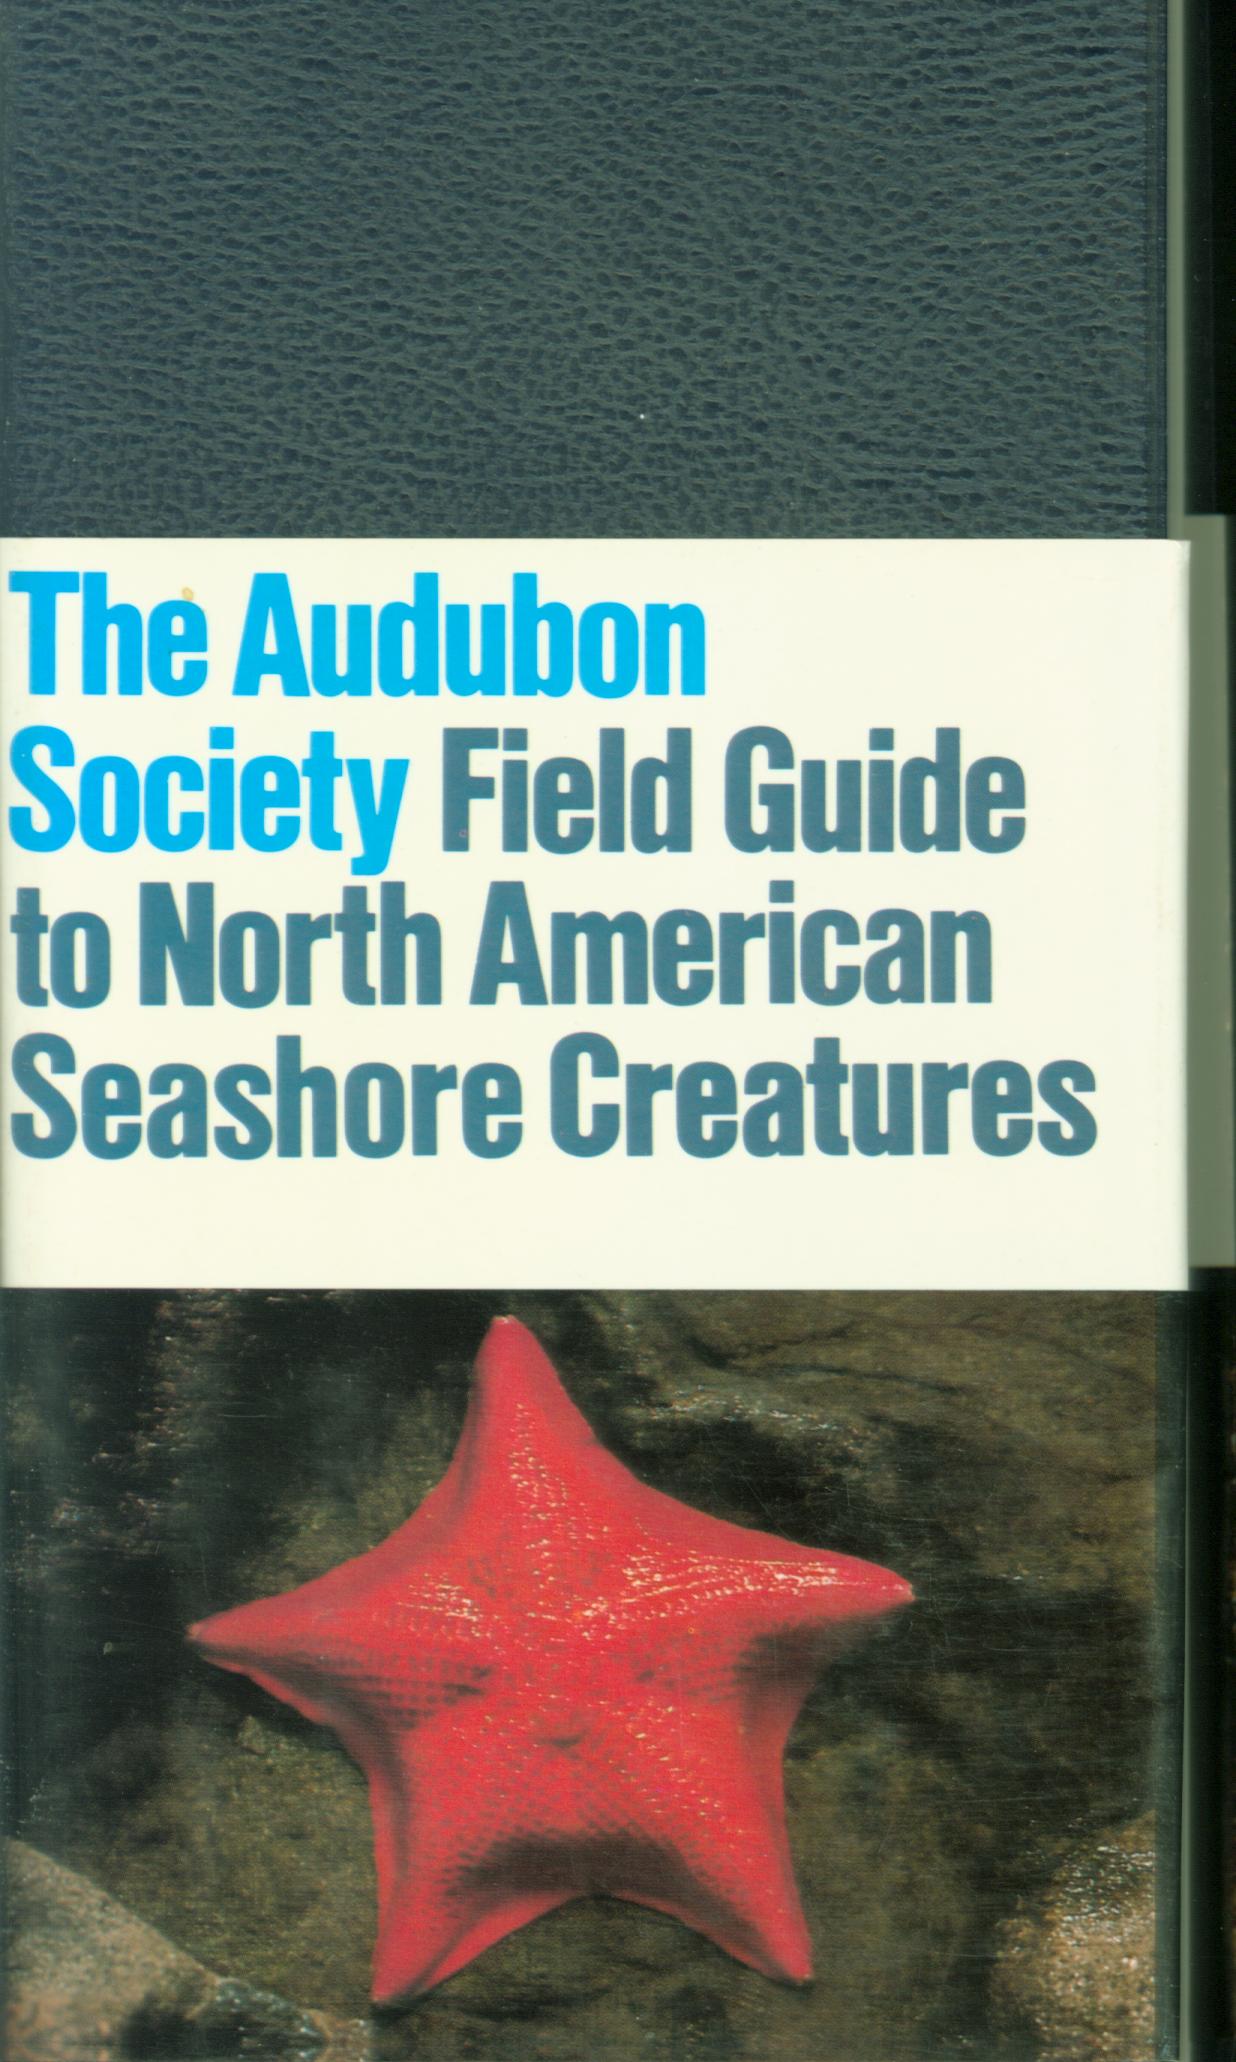 FIELD GUIDE TO NORTH AMERICAN SEASHORE CREATURES: The Audubon Society